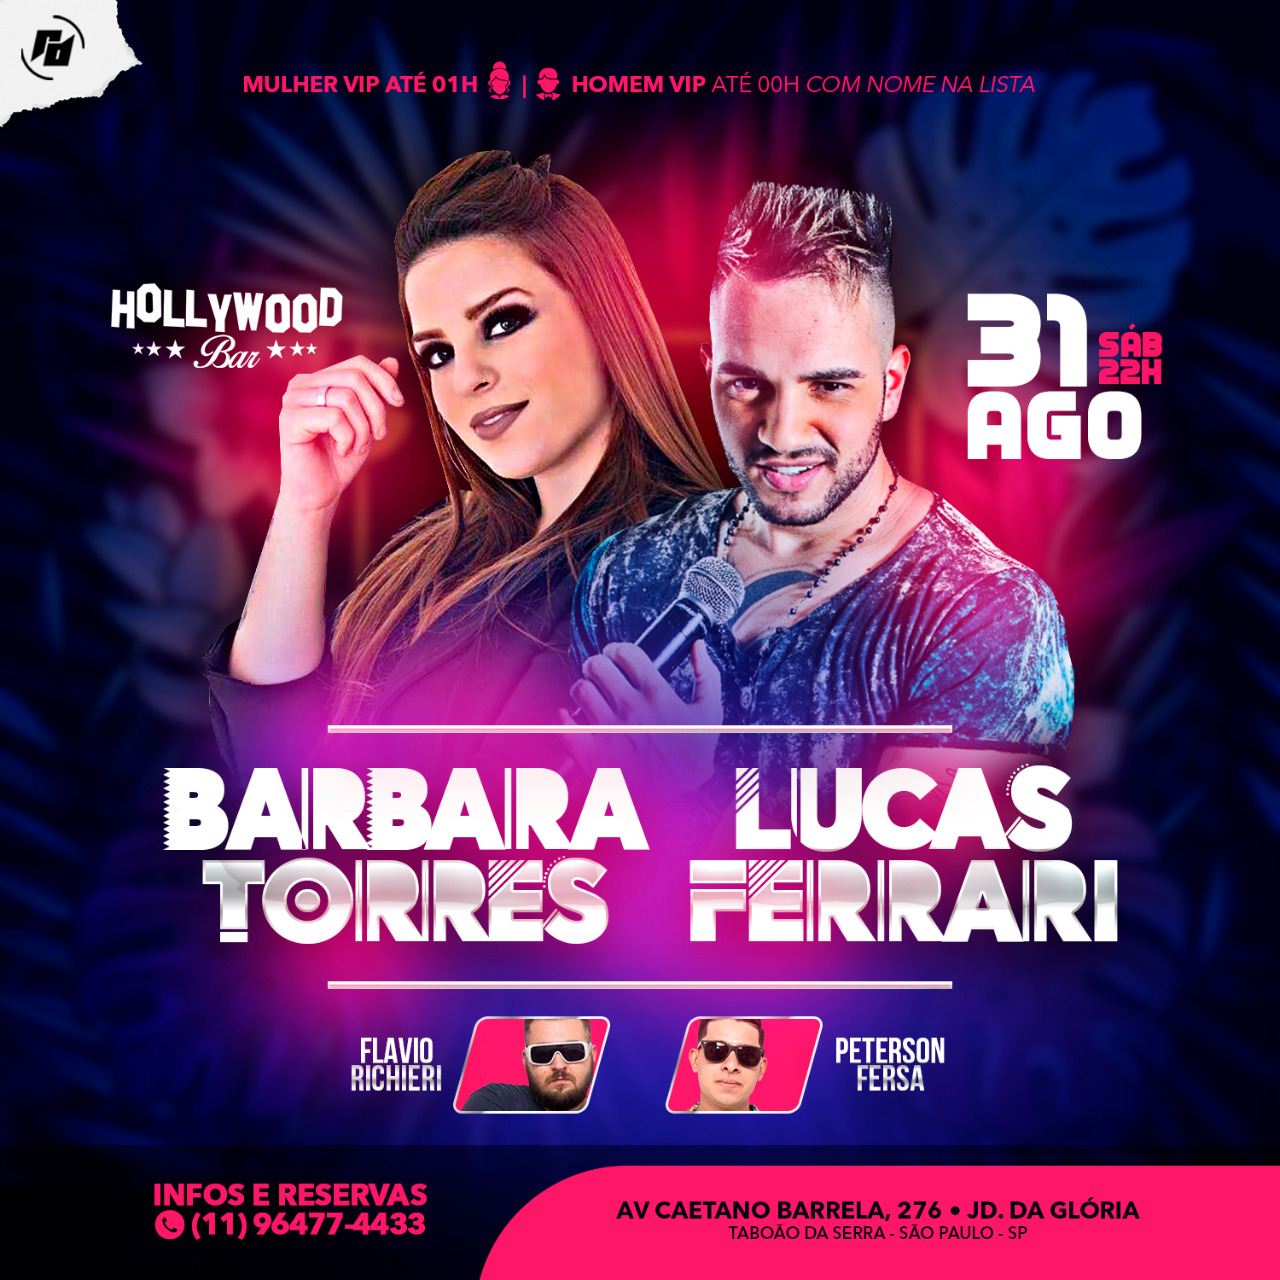 Hollywood Bar: Sábado 31/08 - Lucas Ferrari + Barbara Torres.